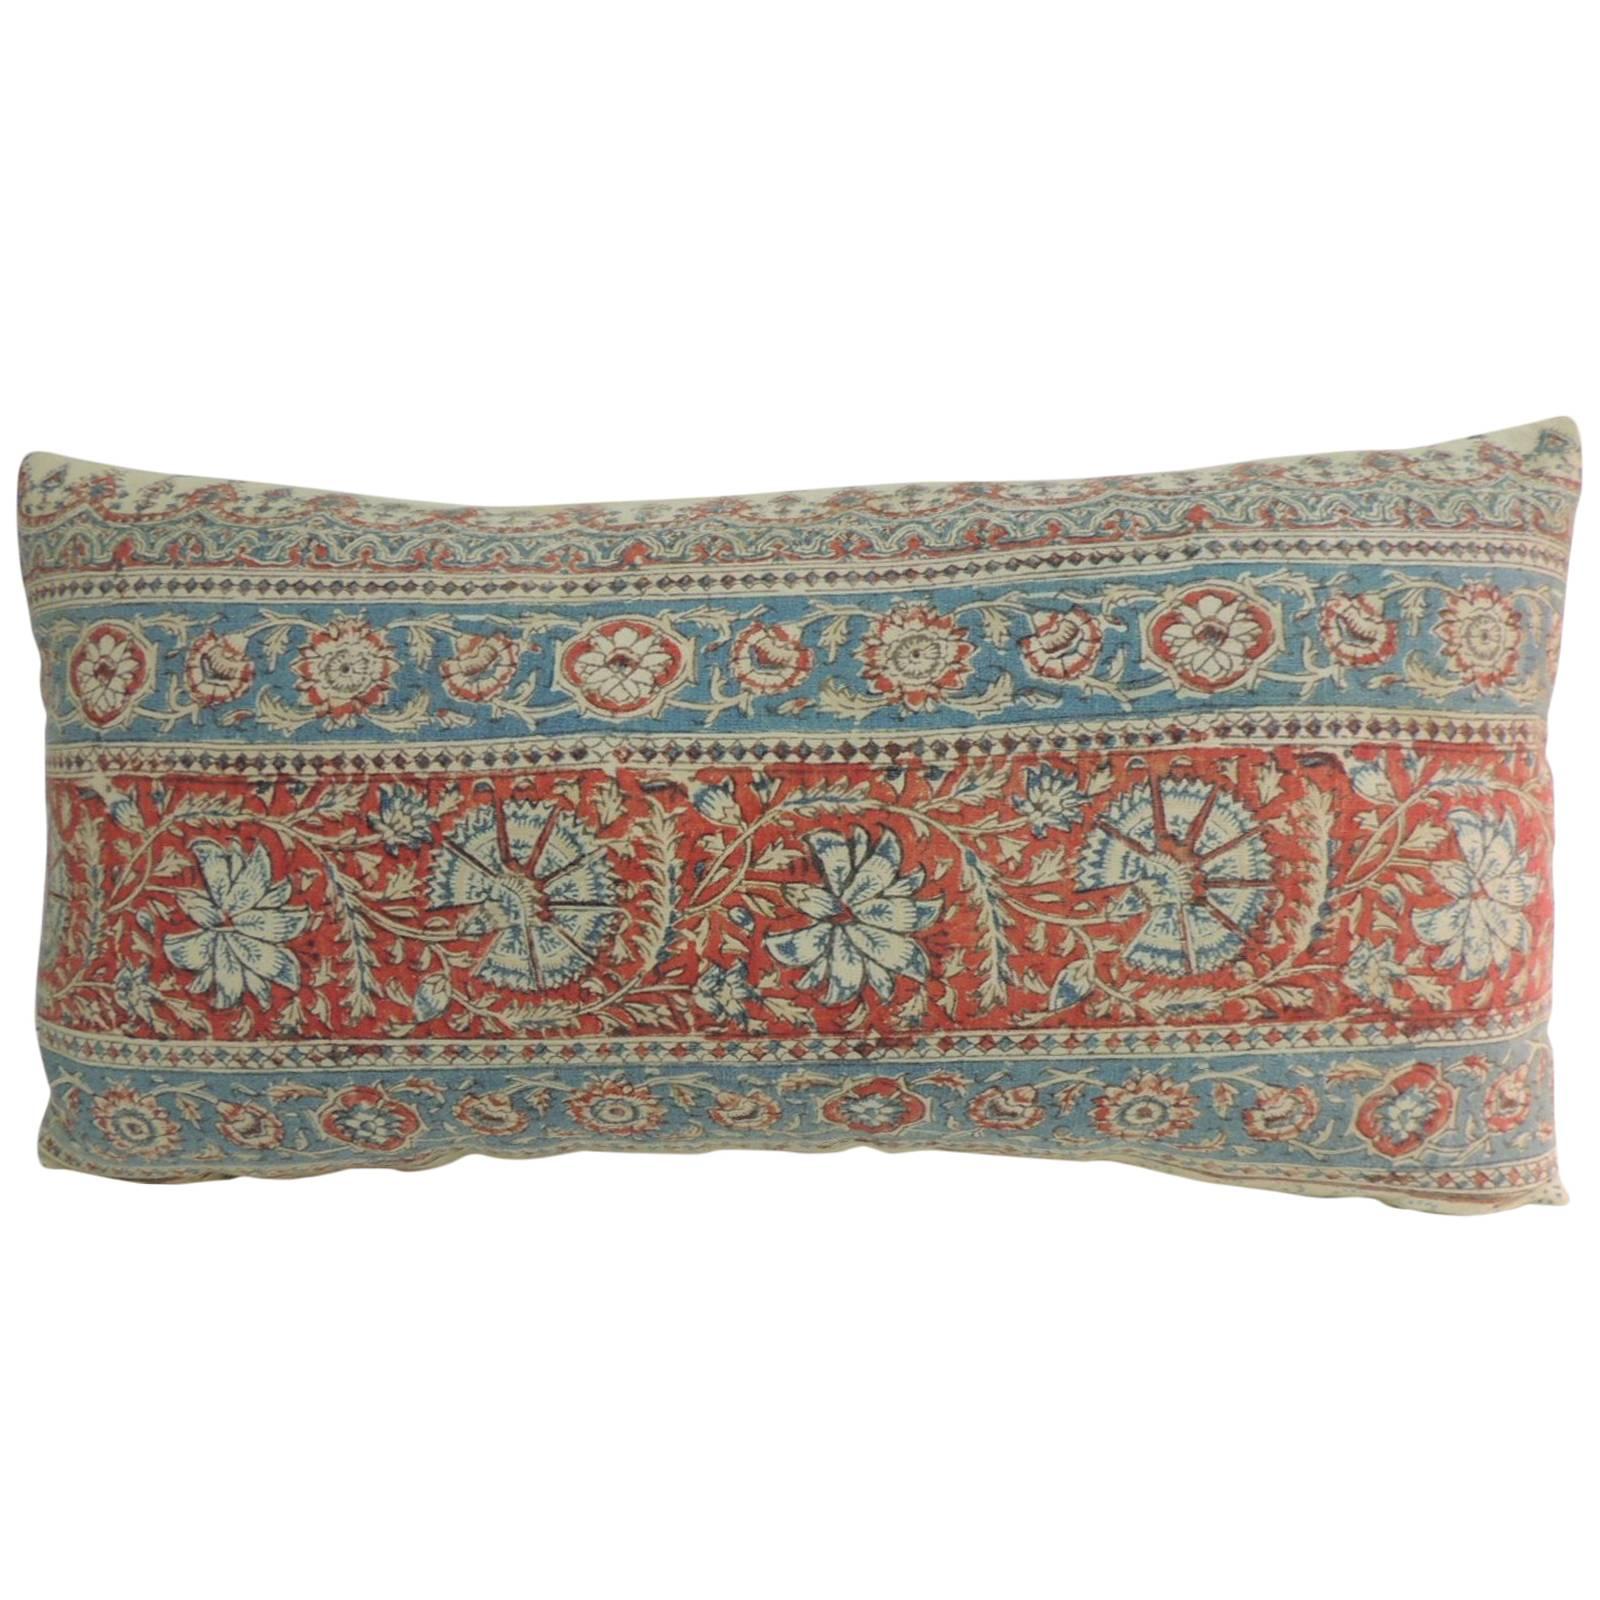 Vintage Indian Hand-Blocked Floral Textile Decorative Bolster Pillow